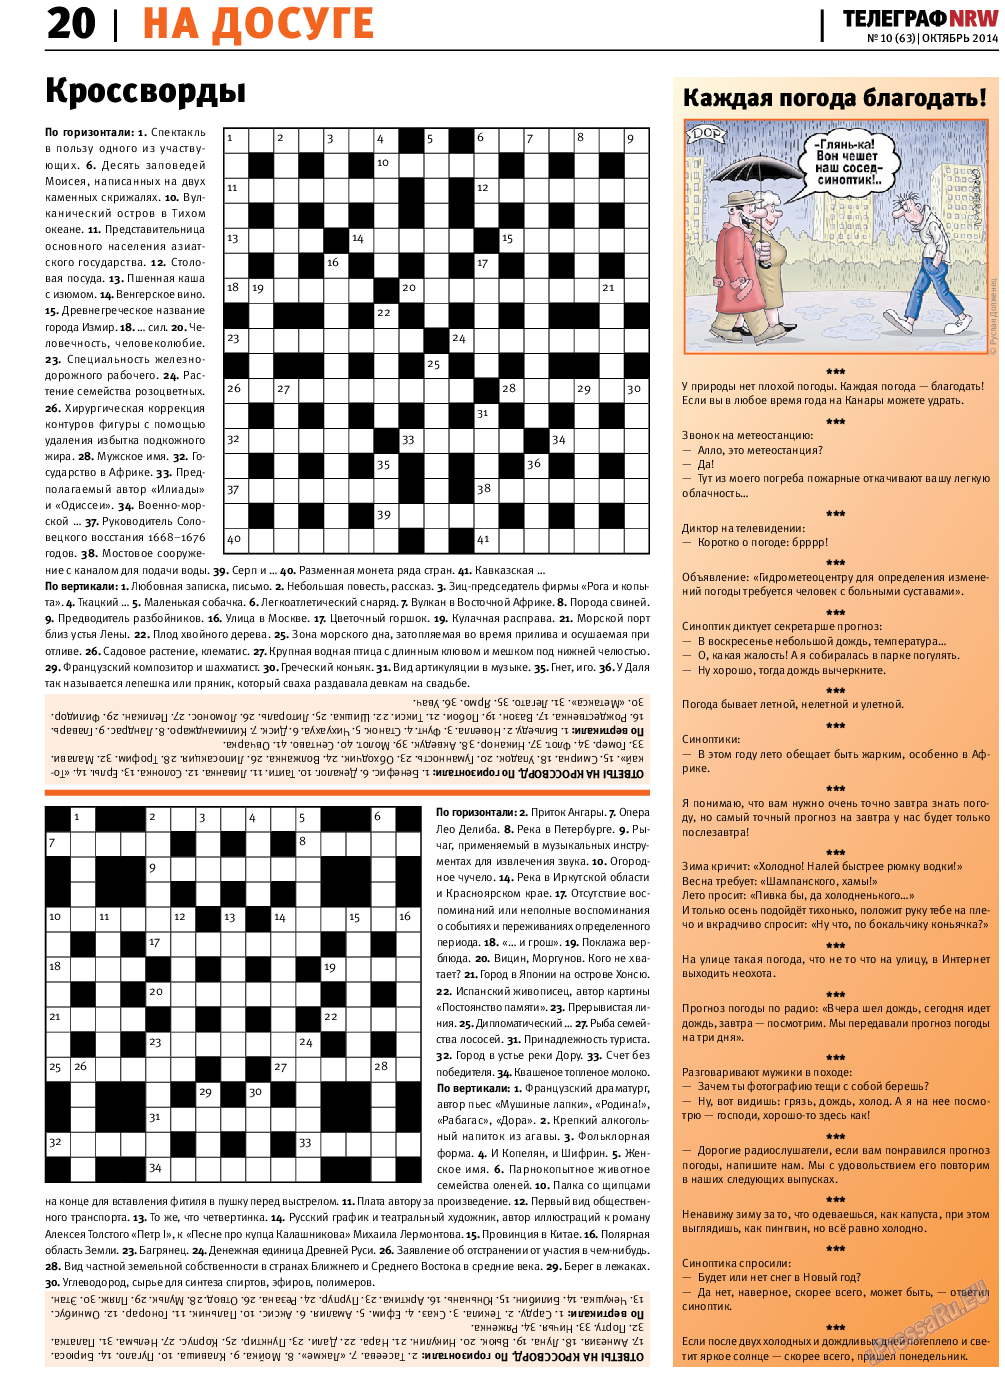 Телеграф NRW, газета. 2014 №10 стр.20